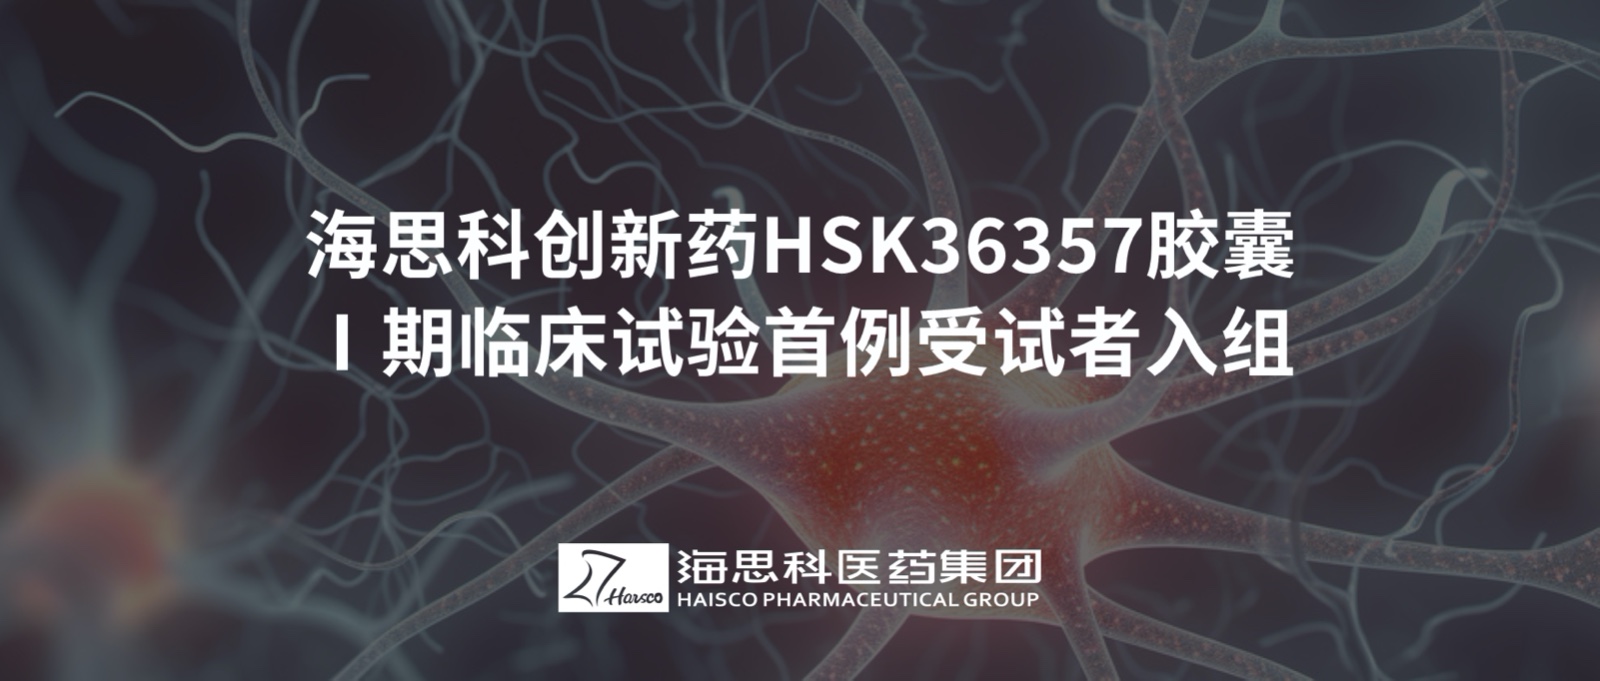 hjc黄金城创新药HSK36357胶囊Ⅰ期临床试验首例受试者入组